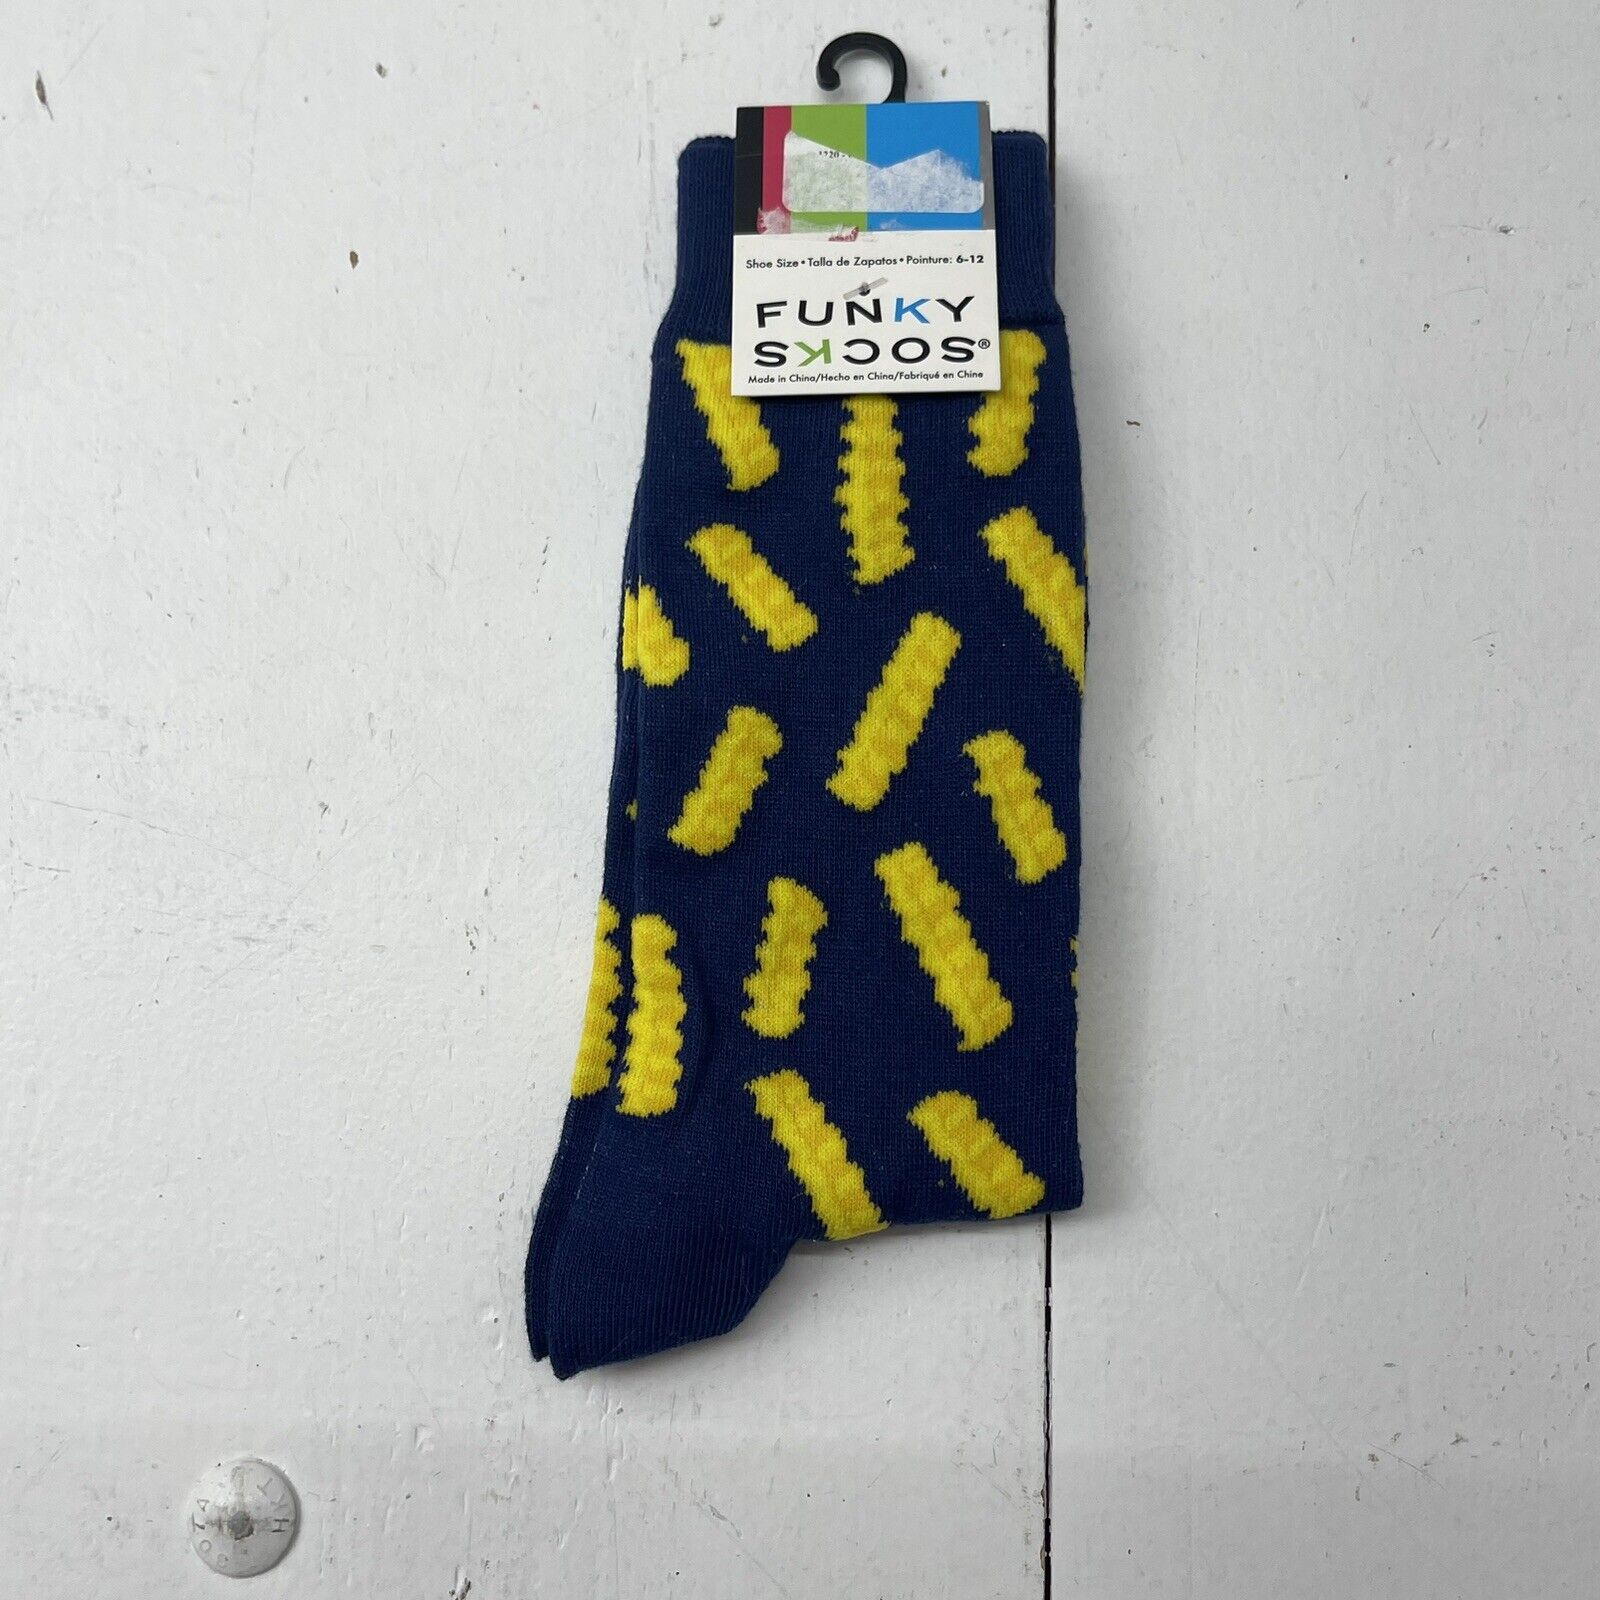 Funky Socks Navy Blue Crinkle Fries Crew Socks Size 6-12 New